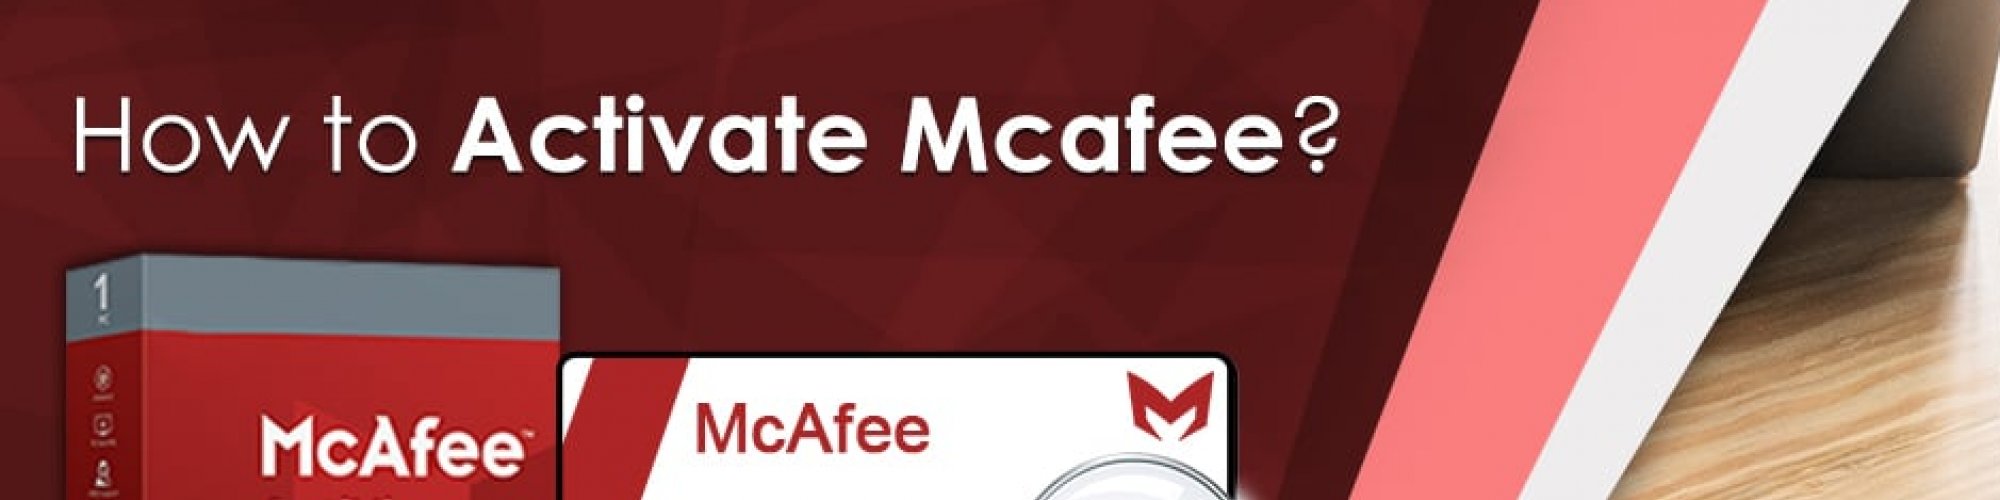 Mcafee.com/Activate